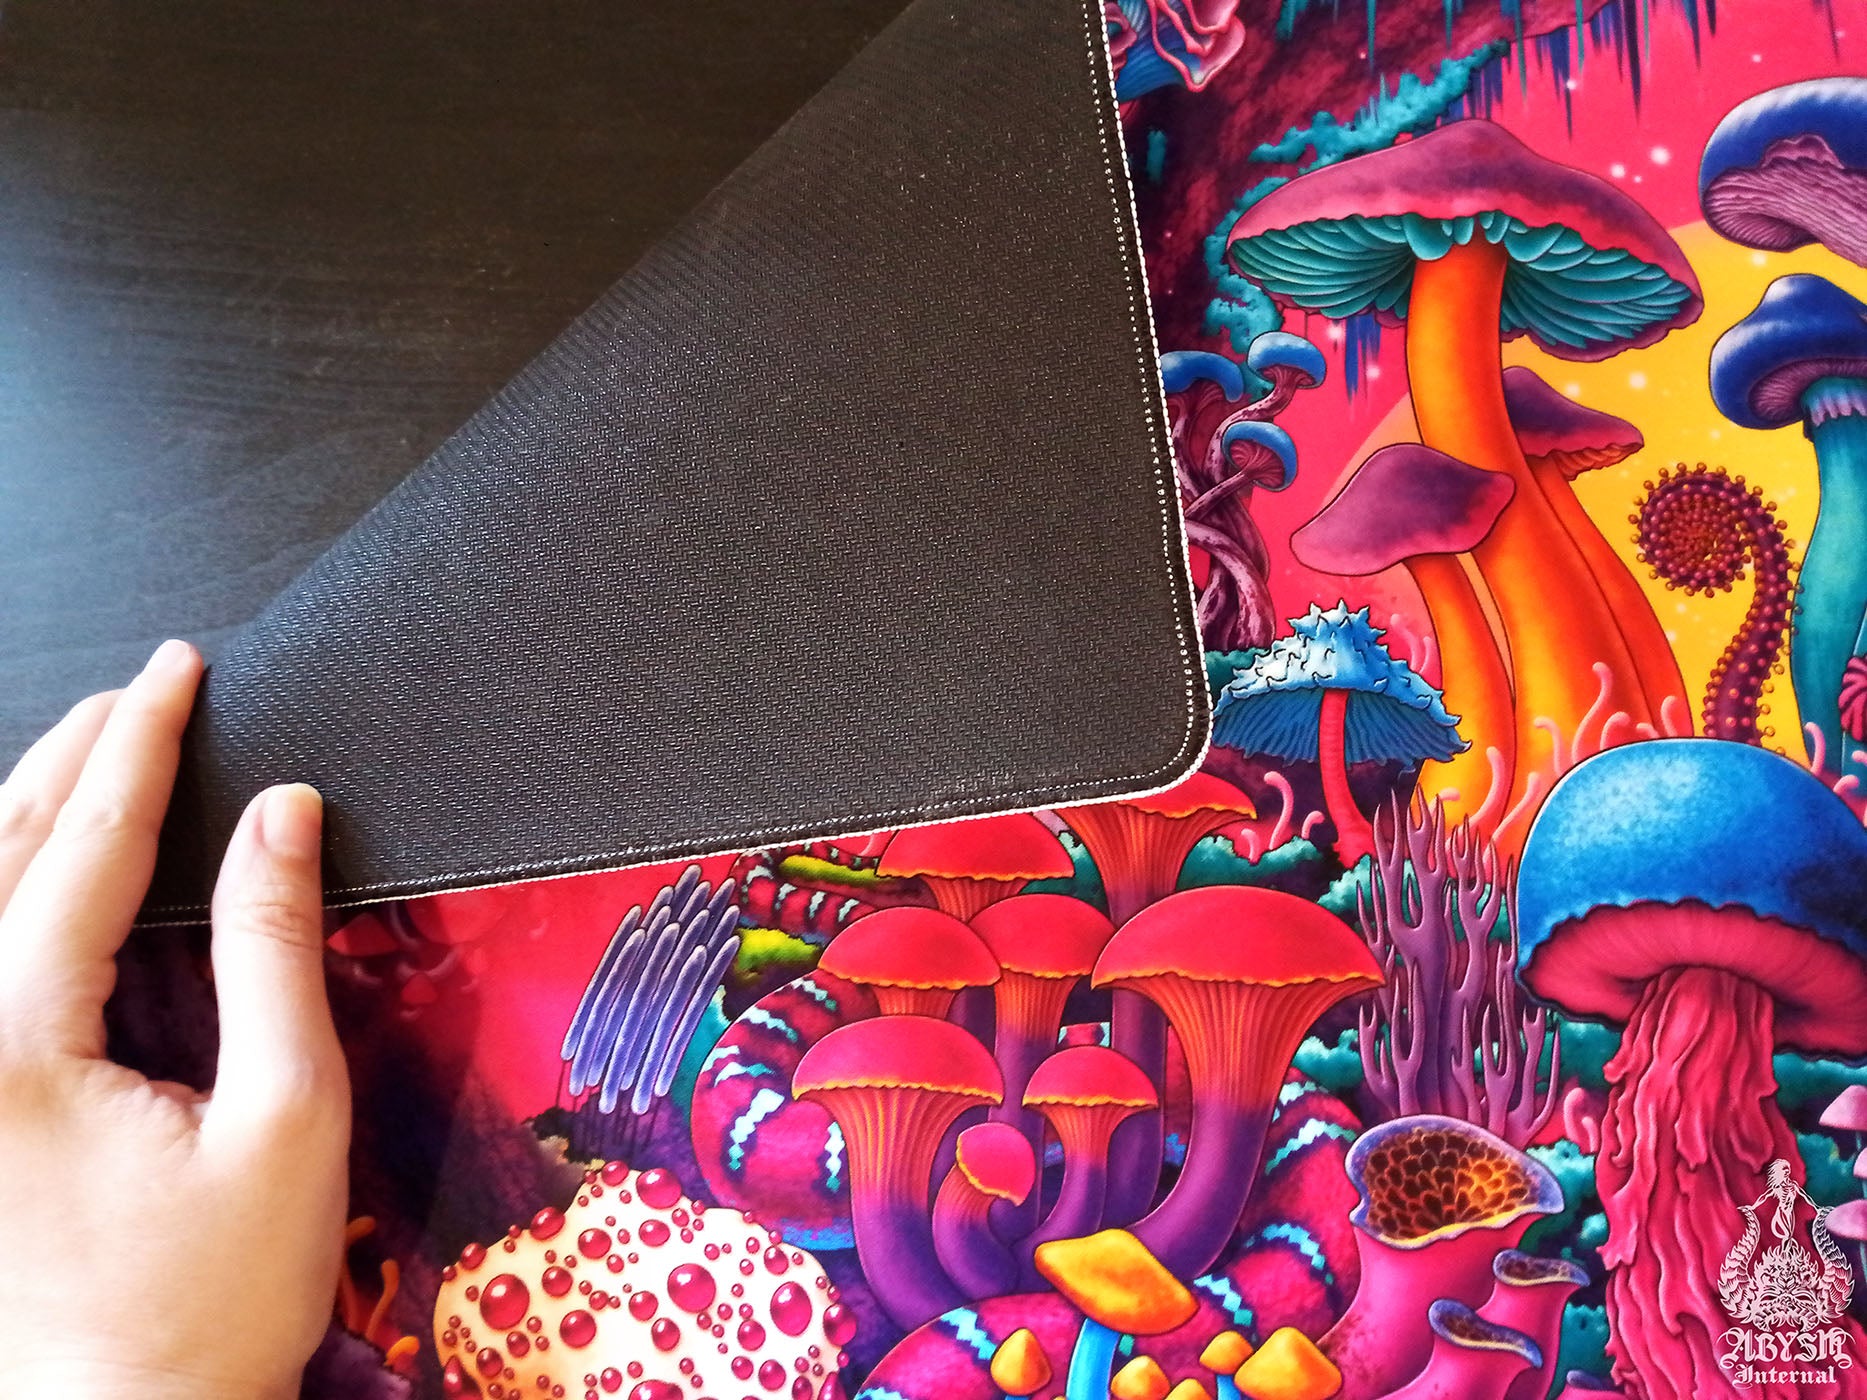 Abysm Internal - Vibrant Gaming Mouse Pad & Desk Mats, Fantasy Art Prints